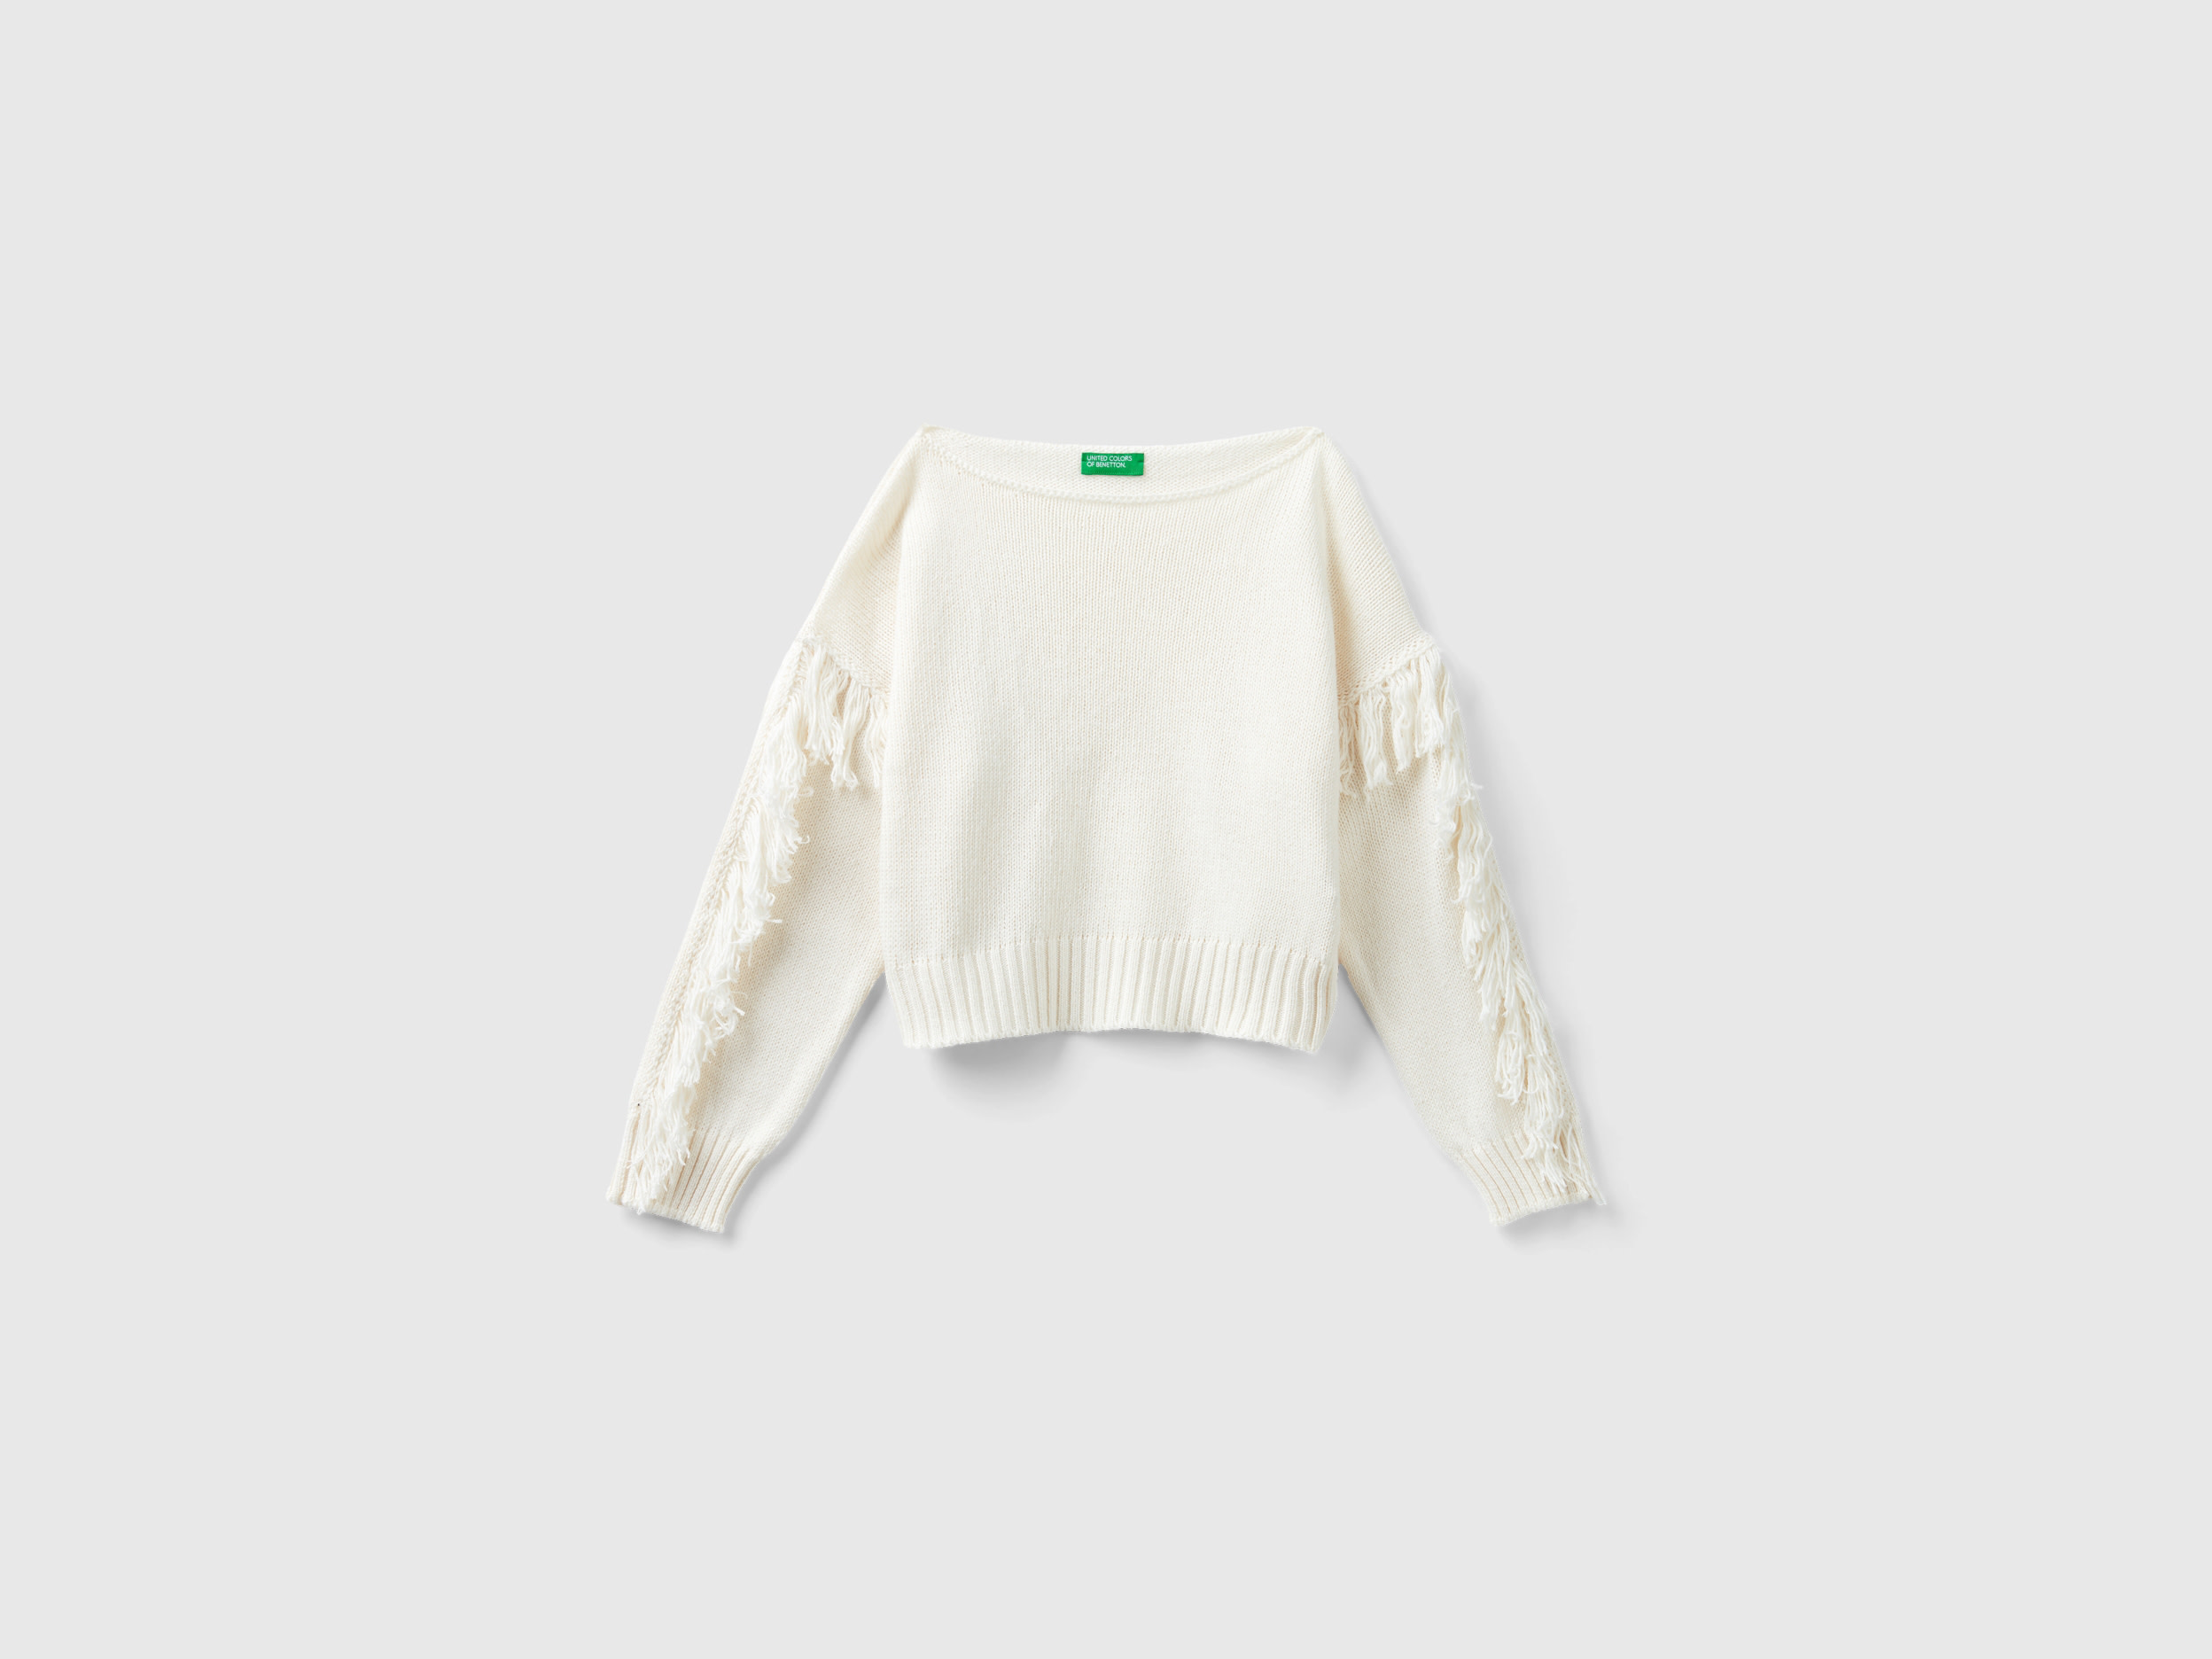 Image of Benetton, Sweater With Fringe, size M, Creamy White, Kids